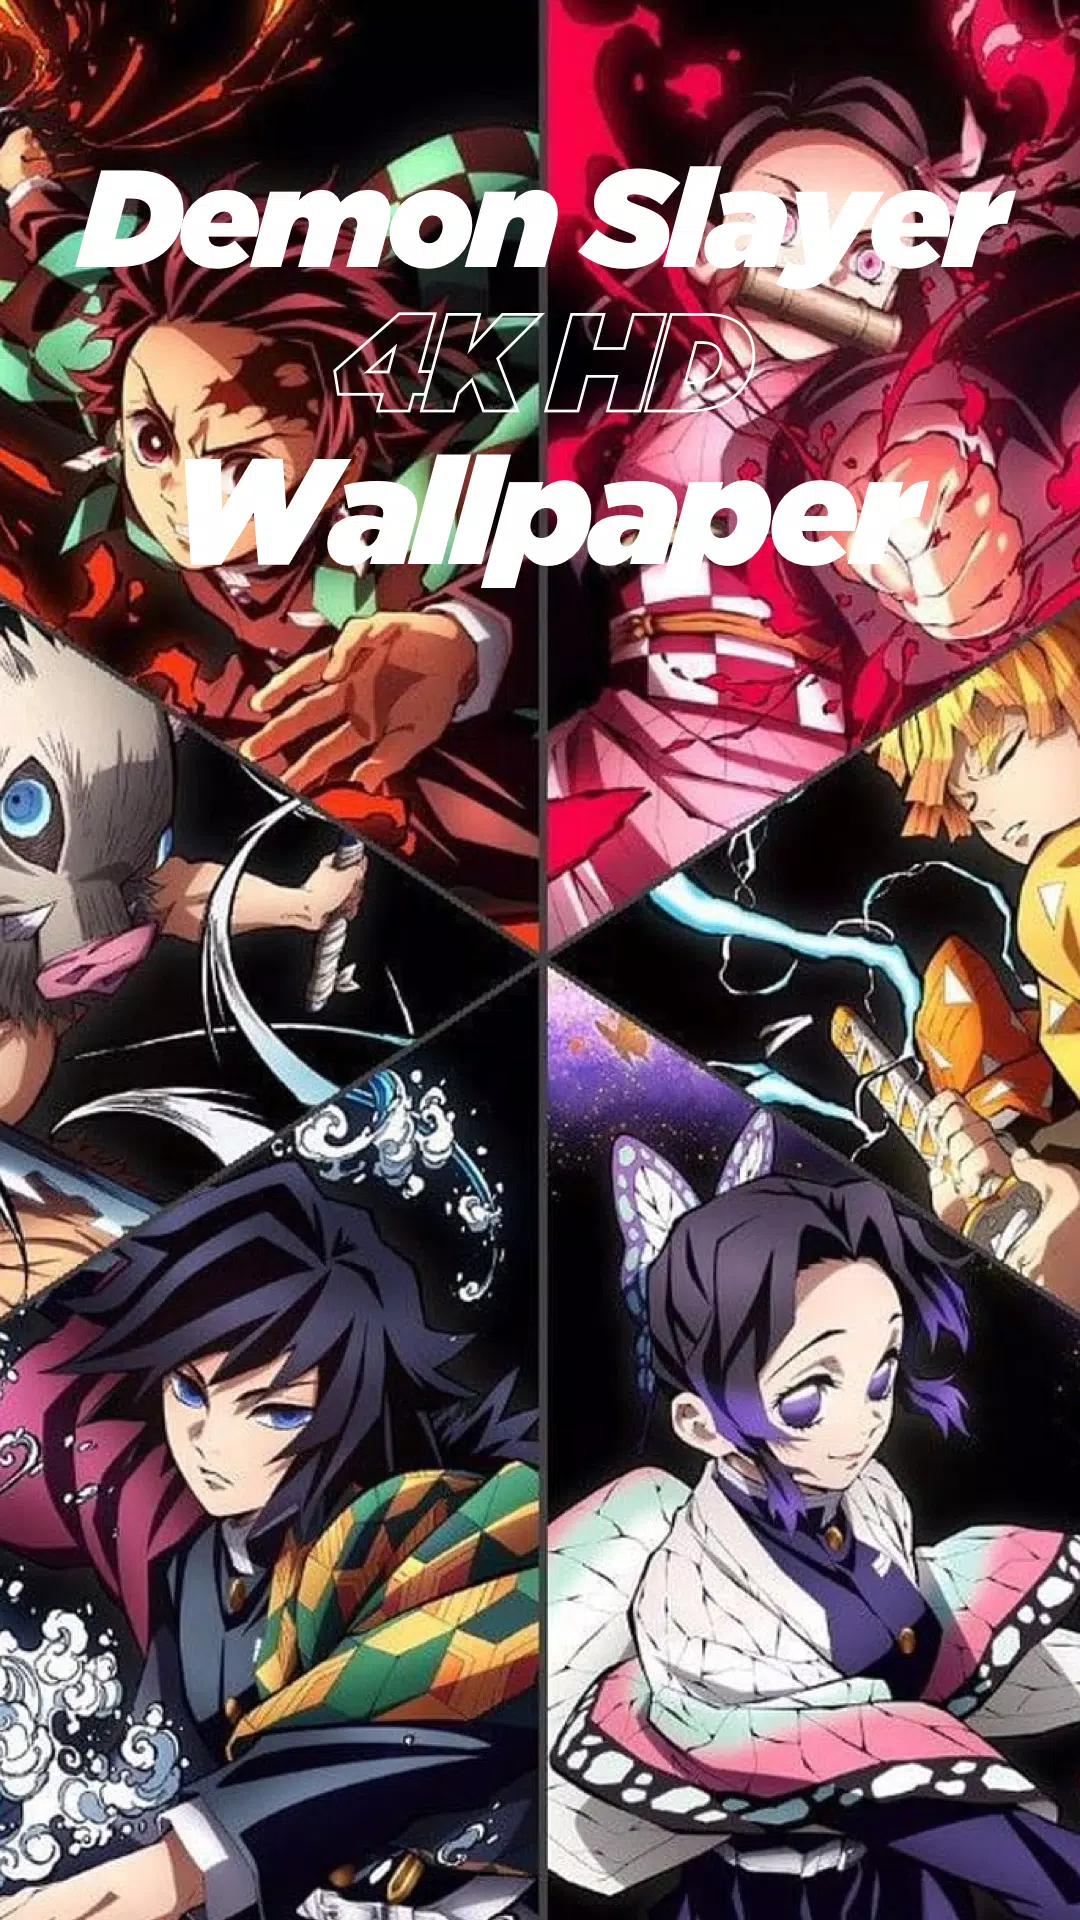 Kimetsu Yaiba Anime Wallpaper 4K APK for Android Download